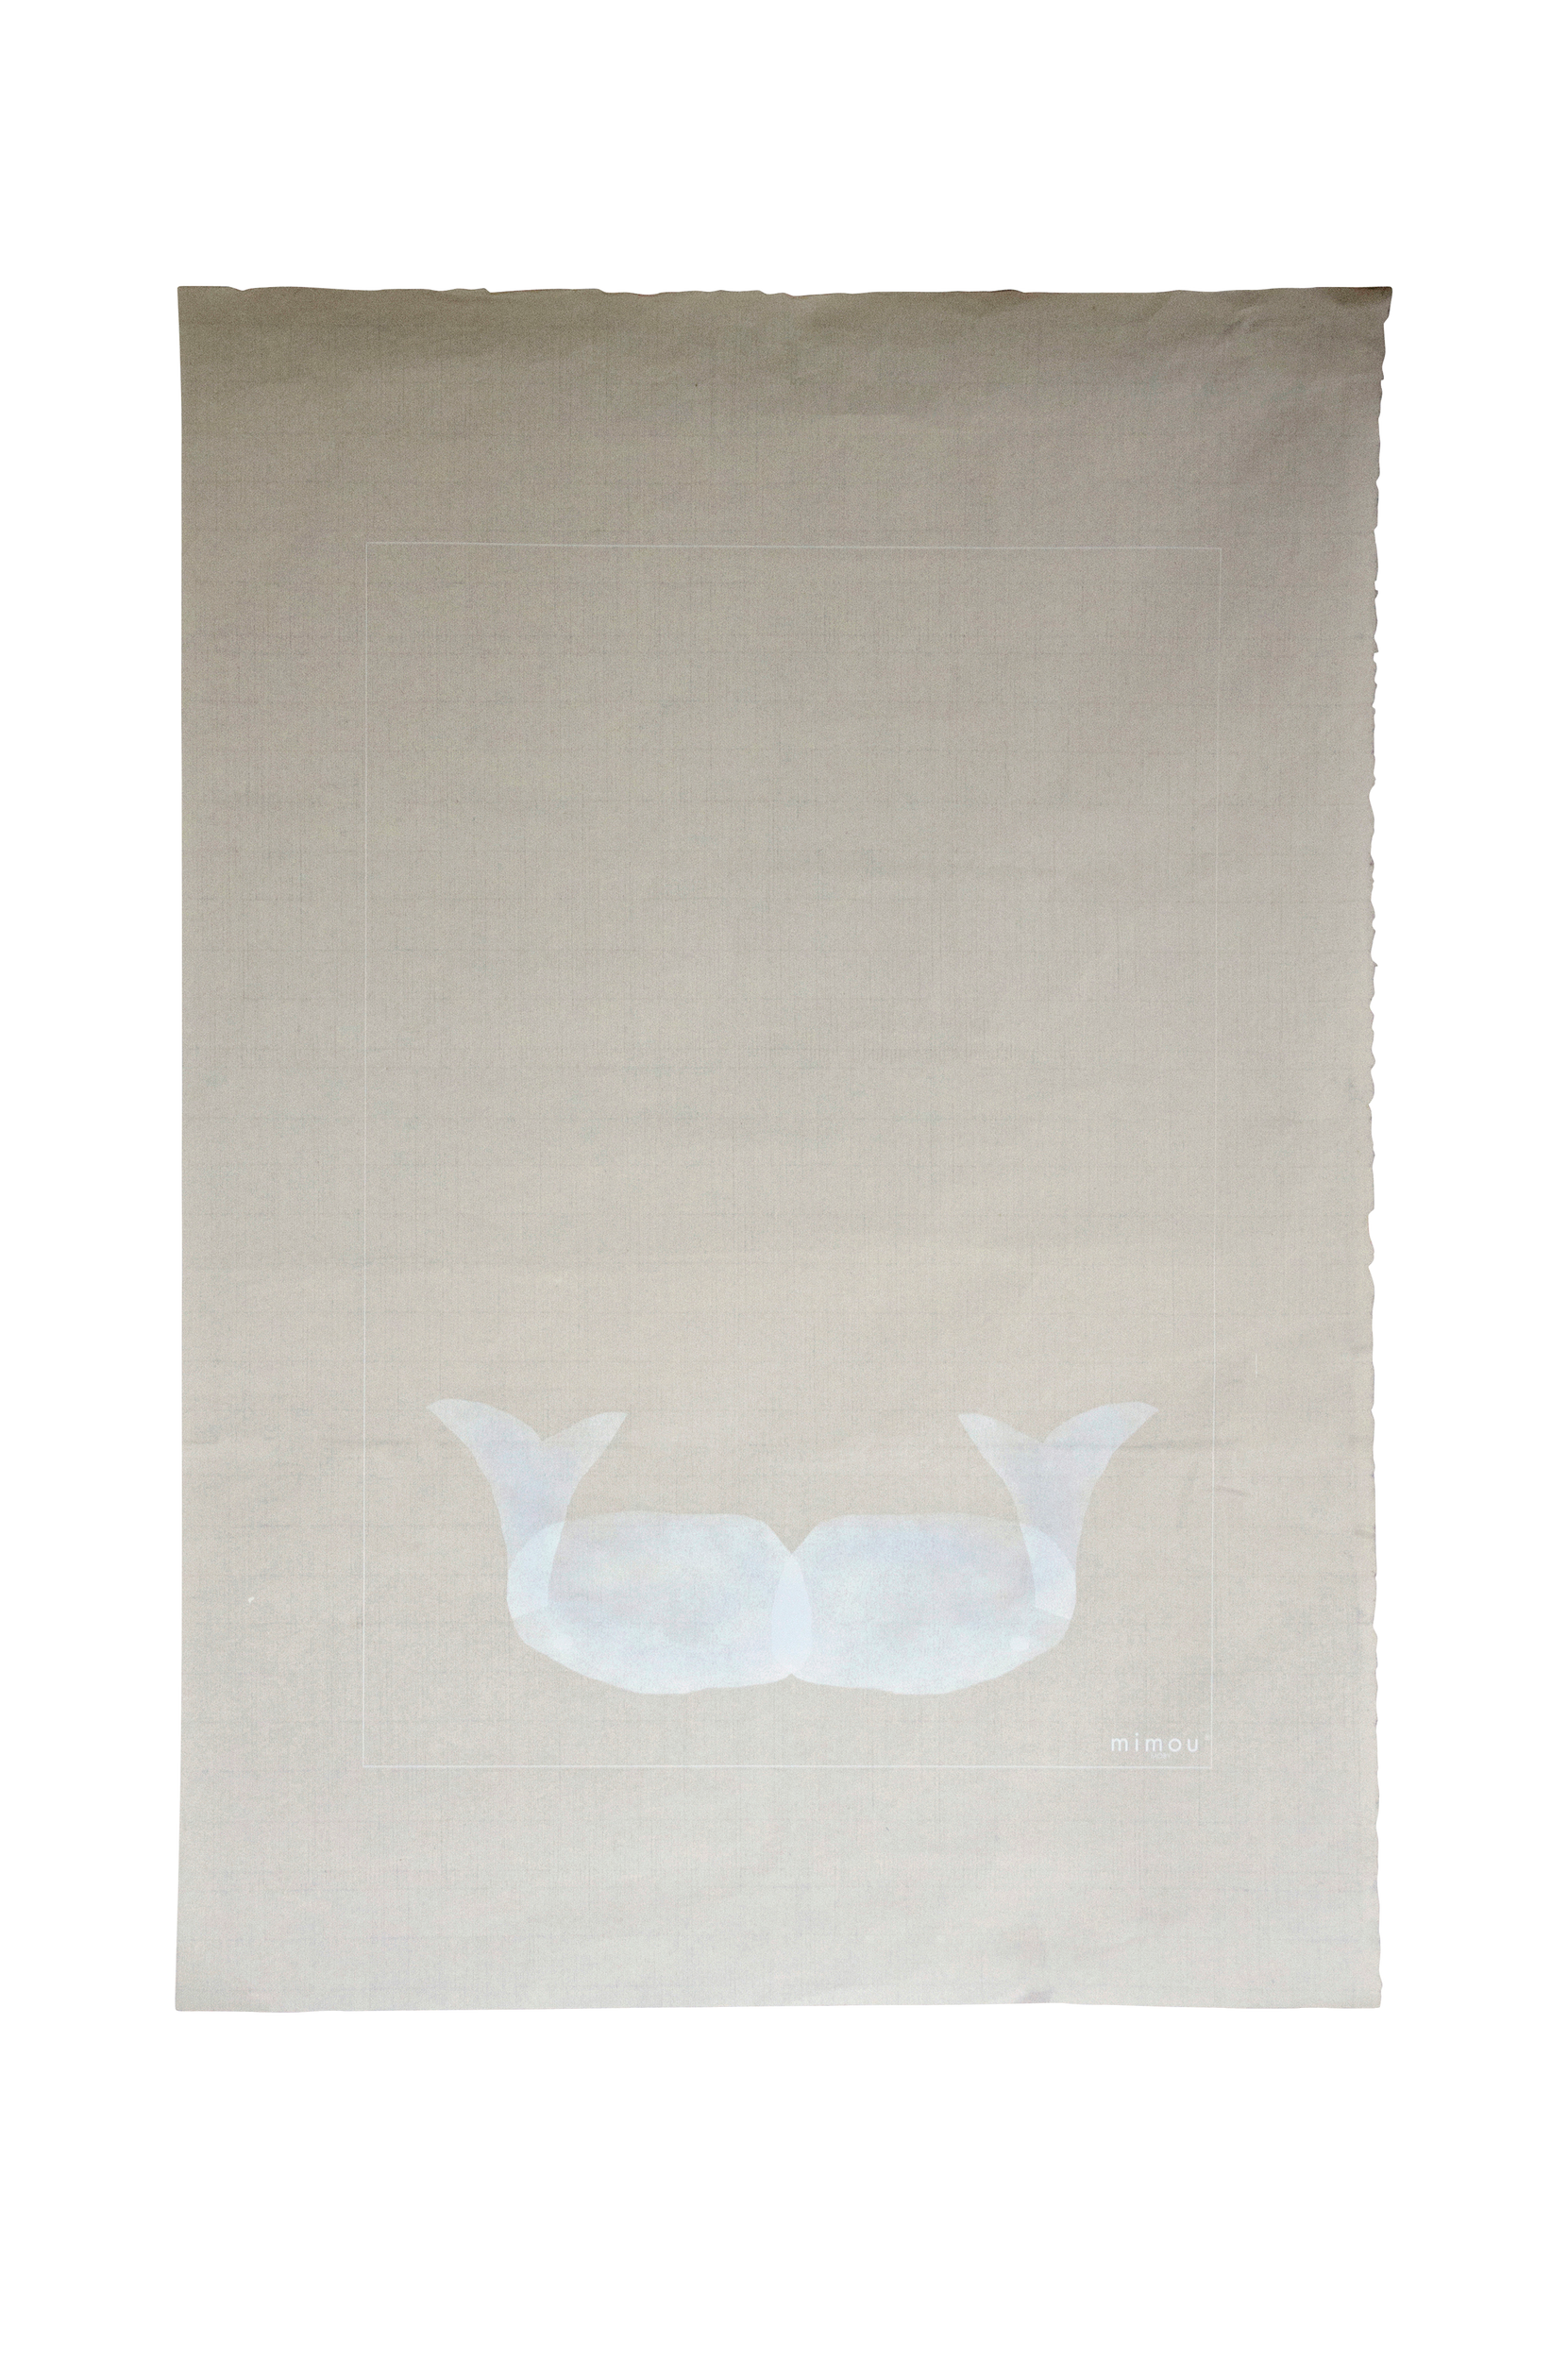 Käsinpainettu Moby juliste 50x70 cm, Mimou